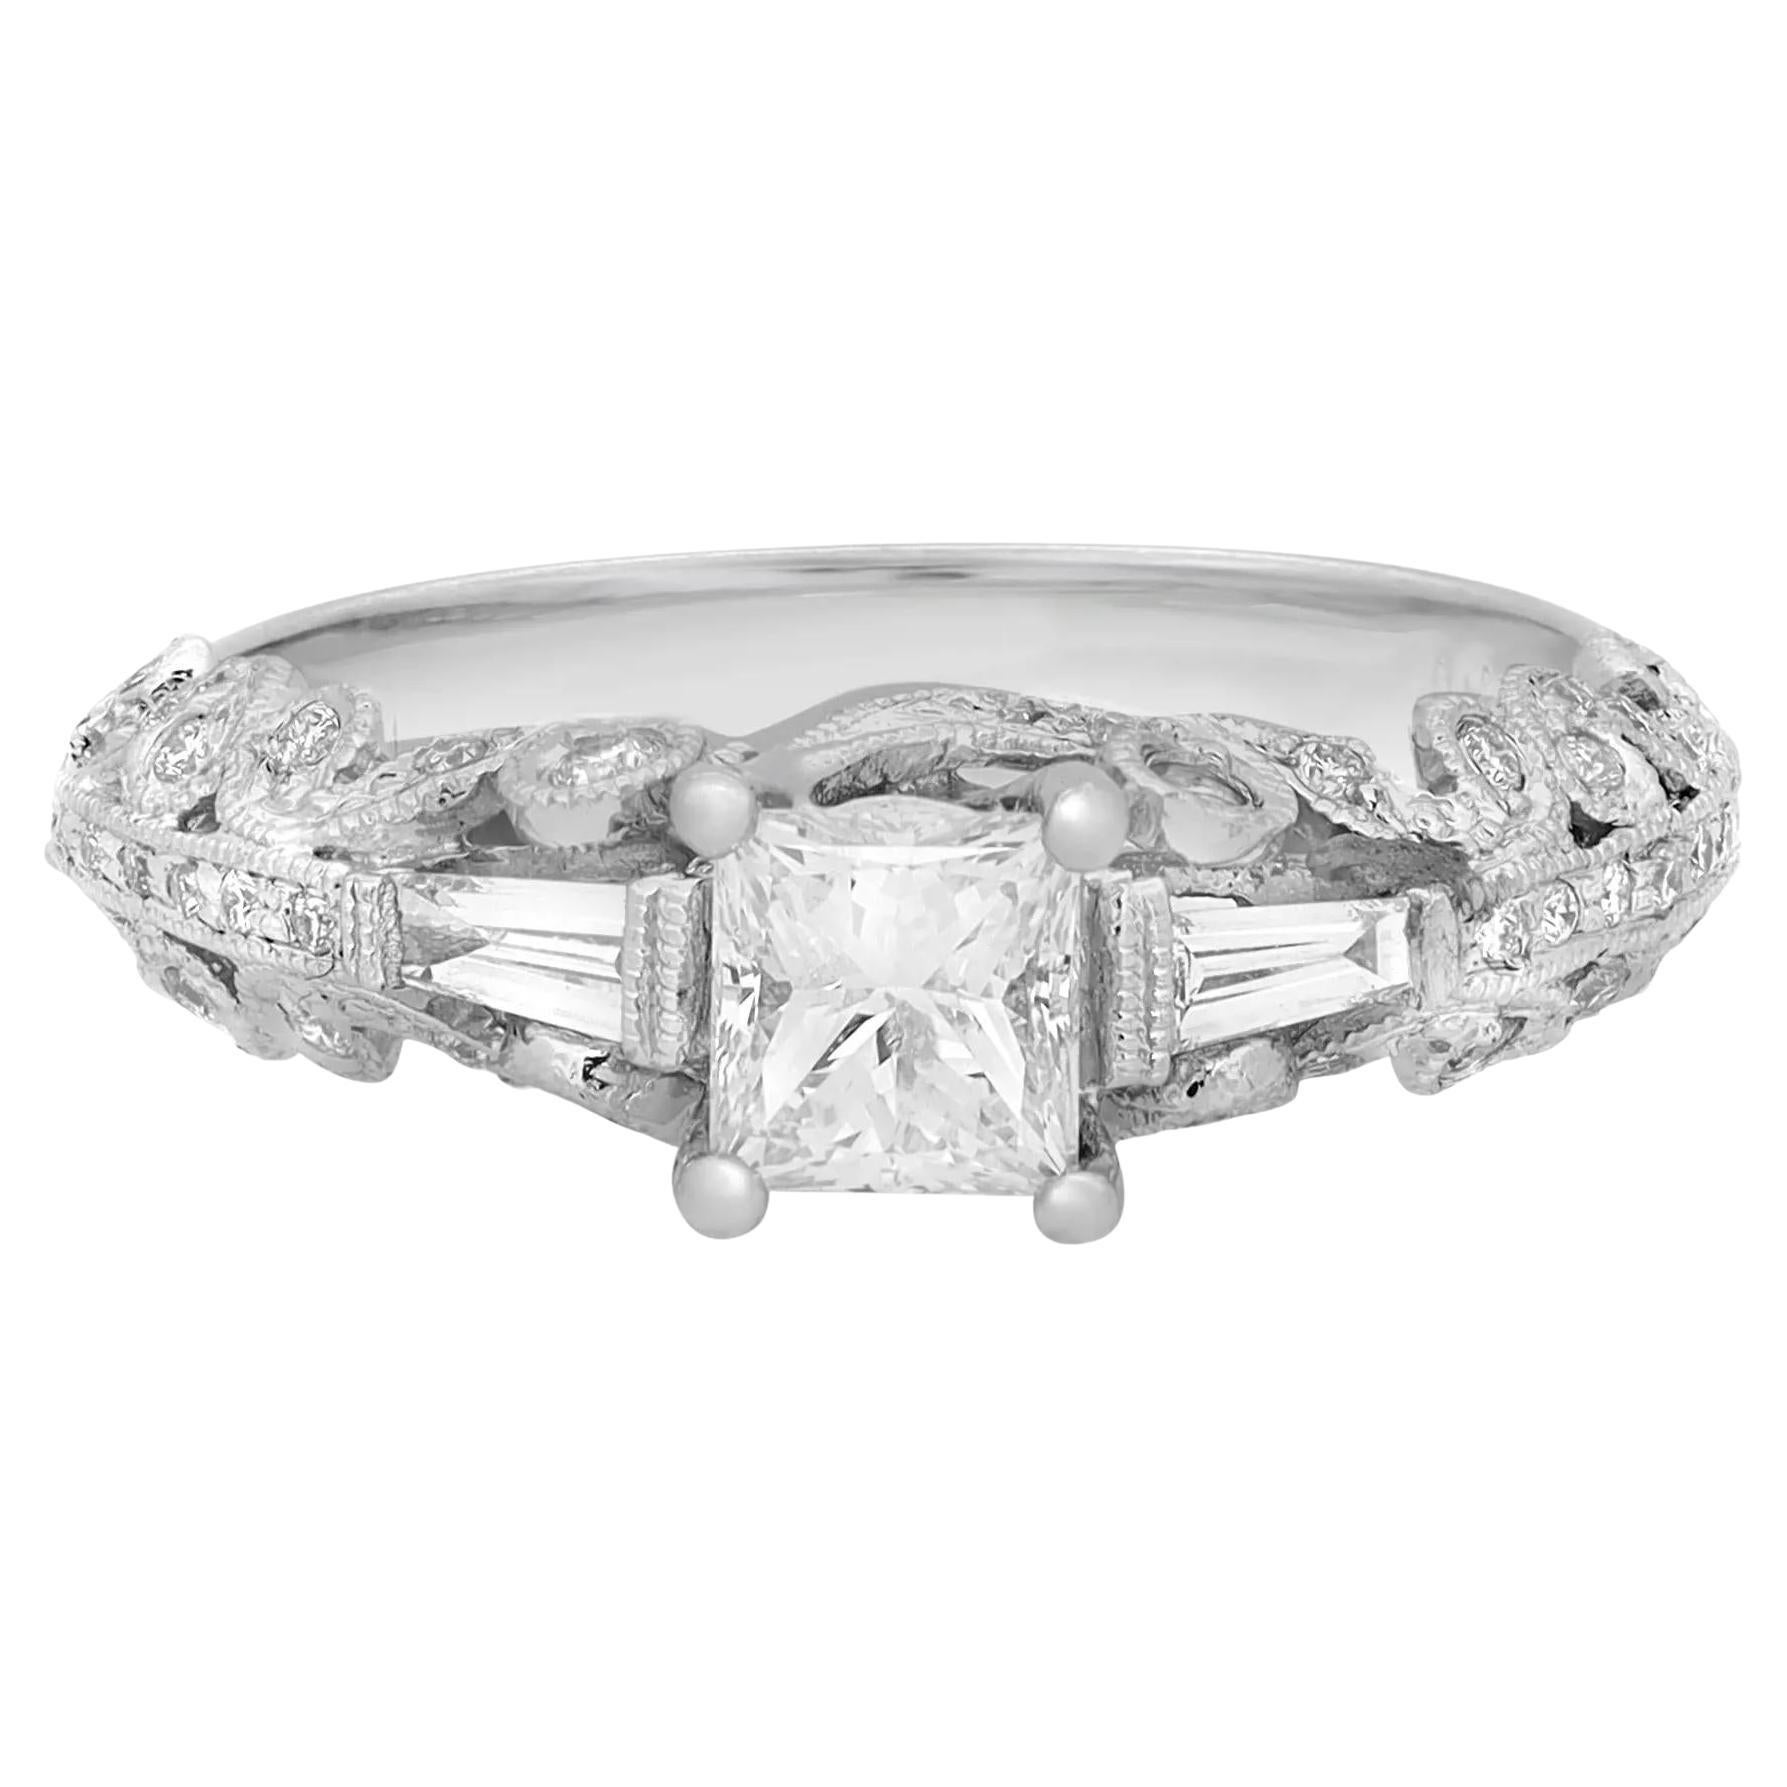 0.50cttw Princess Cut Diamond Engagement Ring 18K White Gold